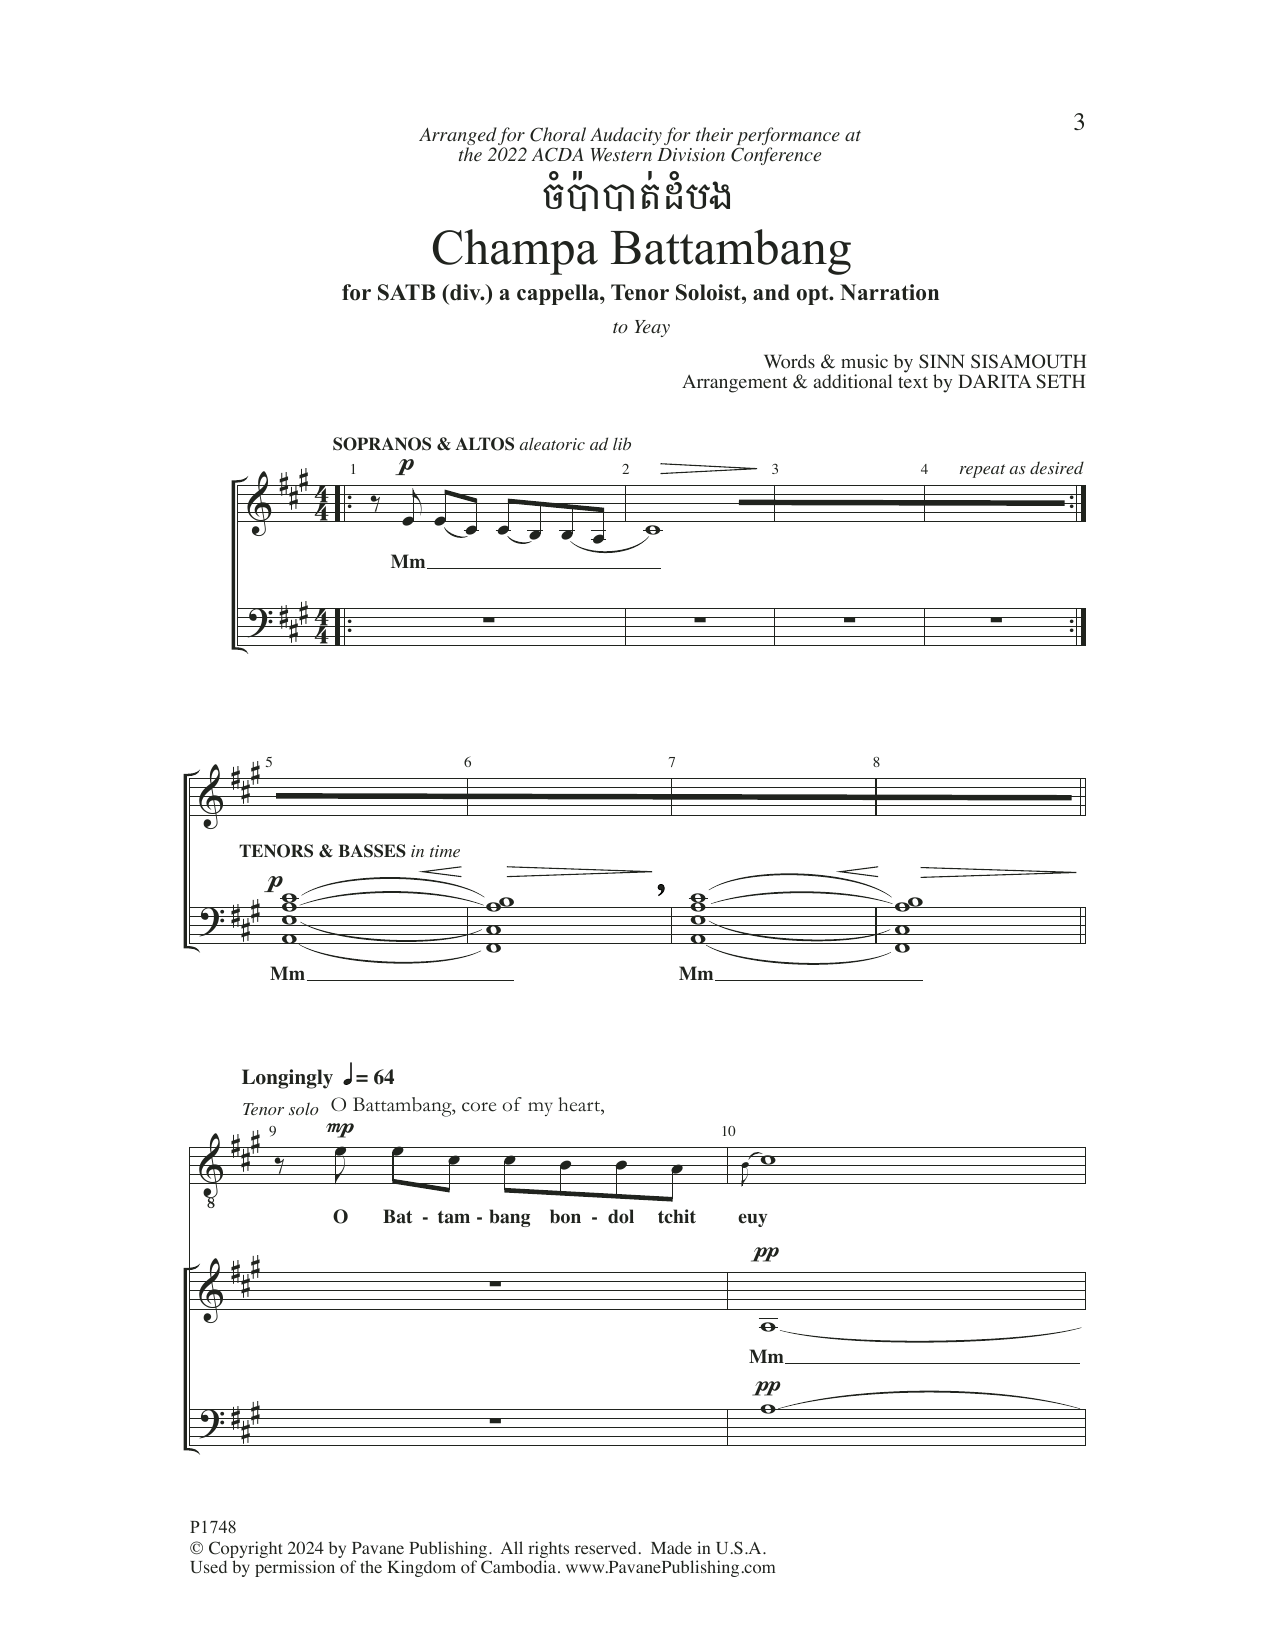 Download Sinn Sisamouth Champa Battambang (arr. Darita Seth) Sheet Music and learn how to play SATB Choir PDF digital score in minutes